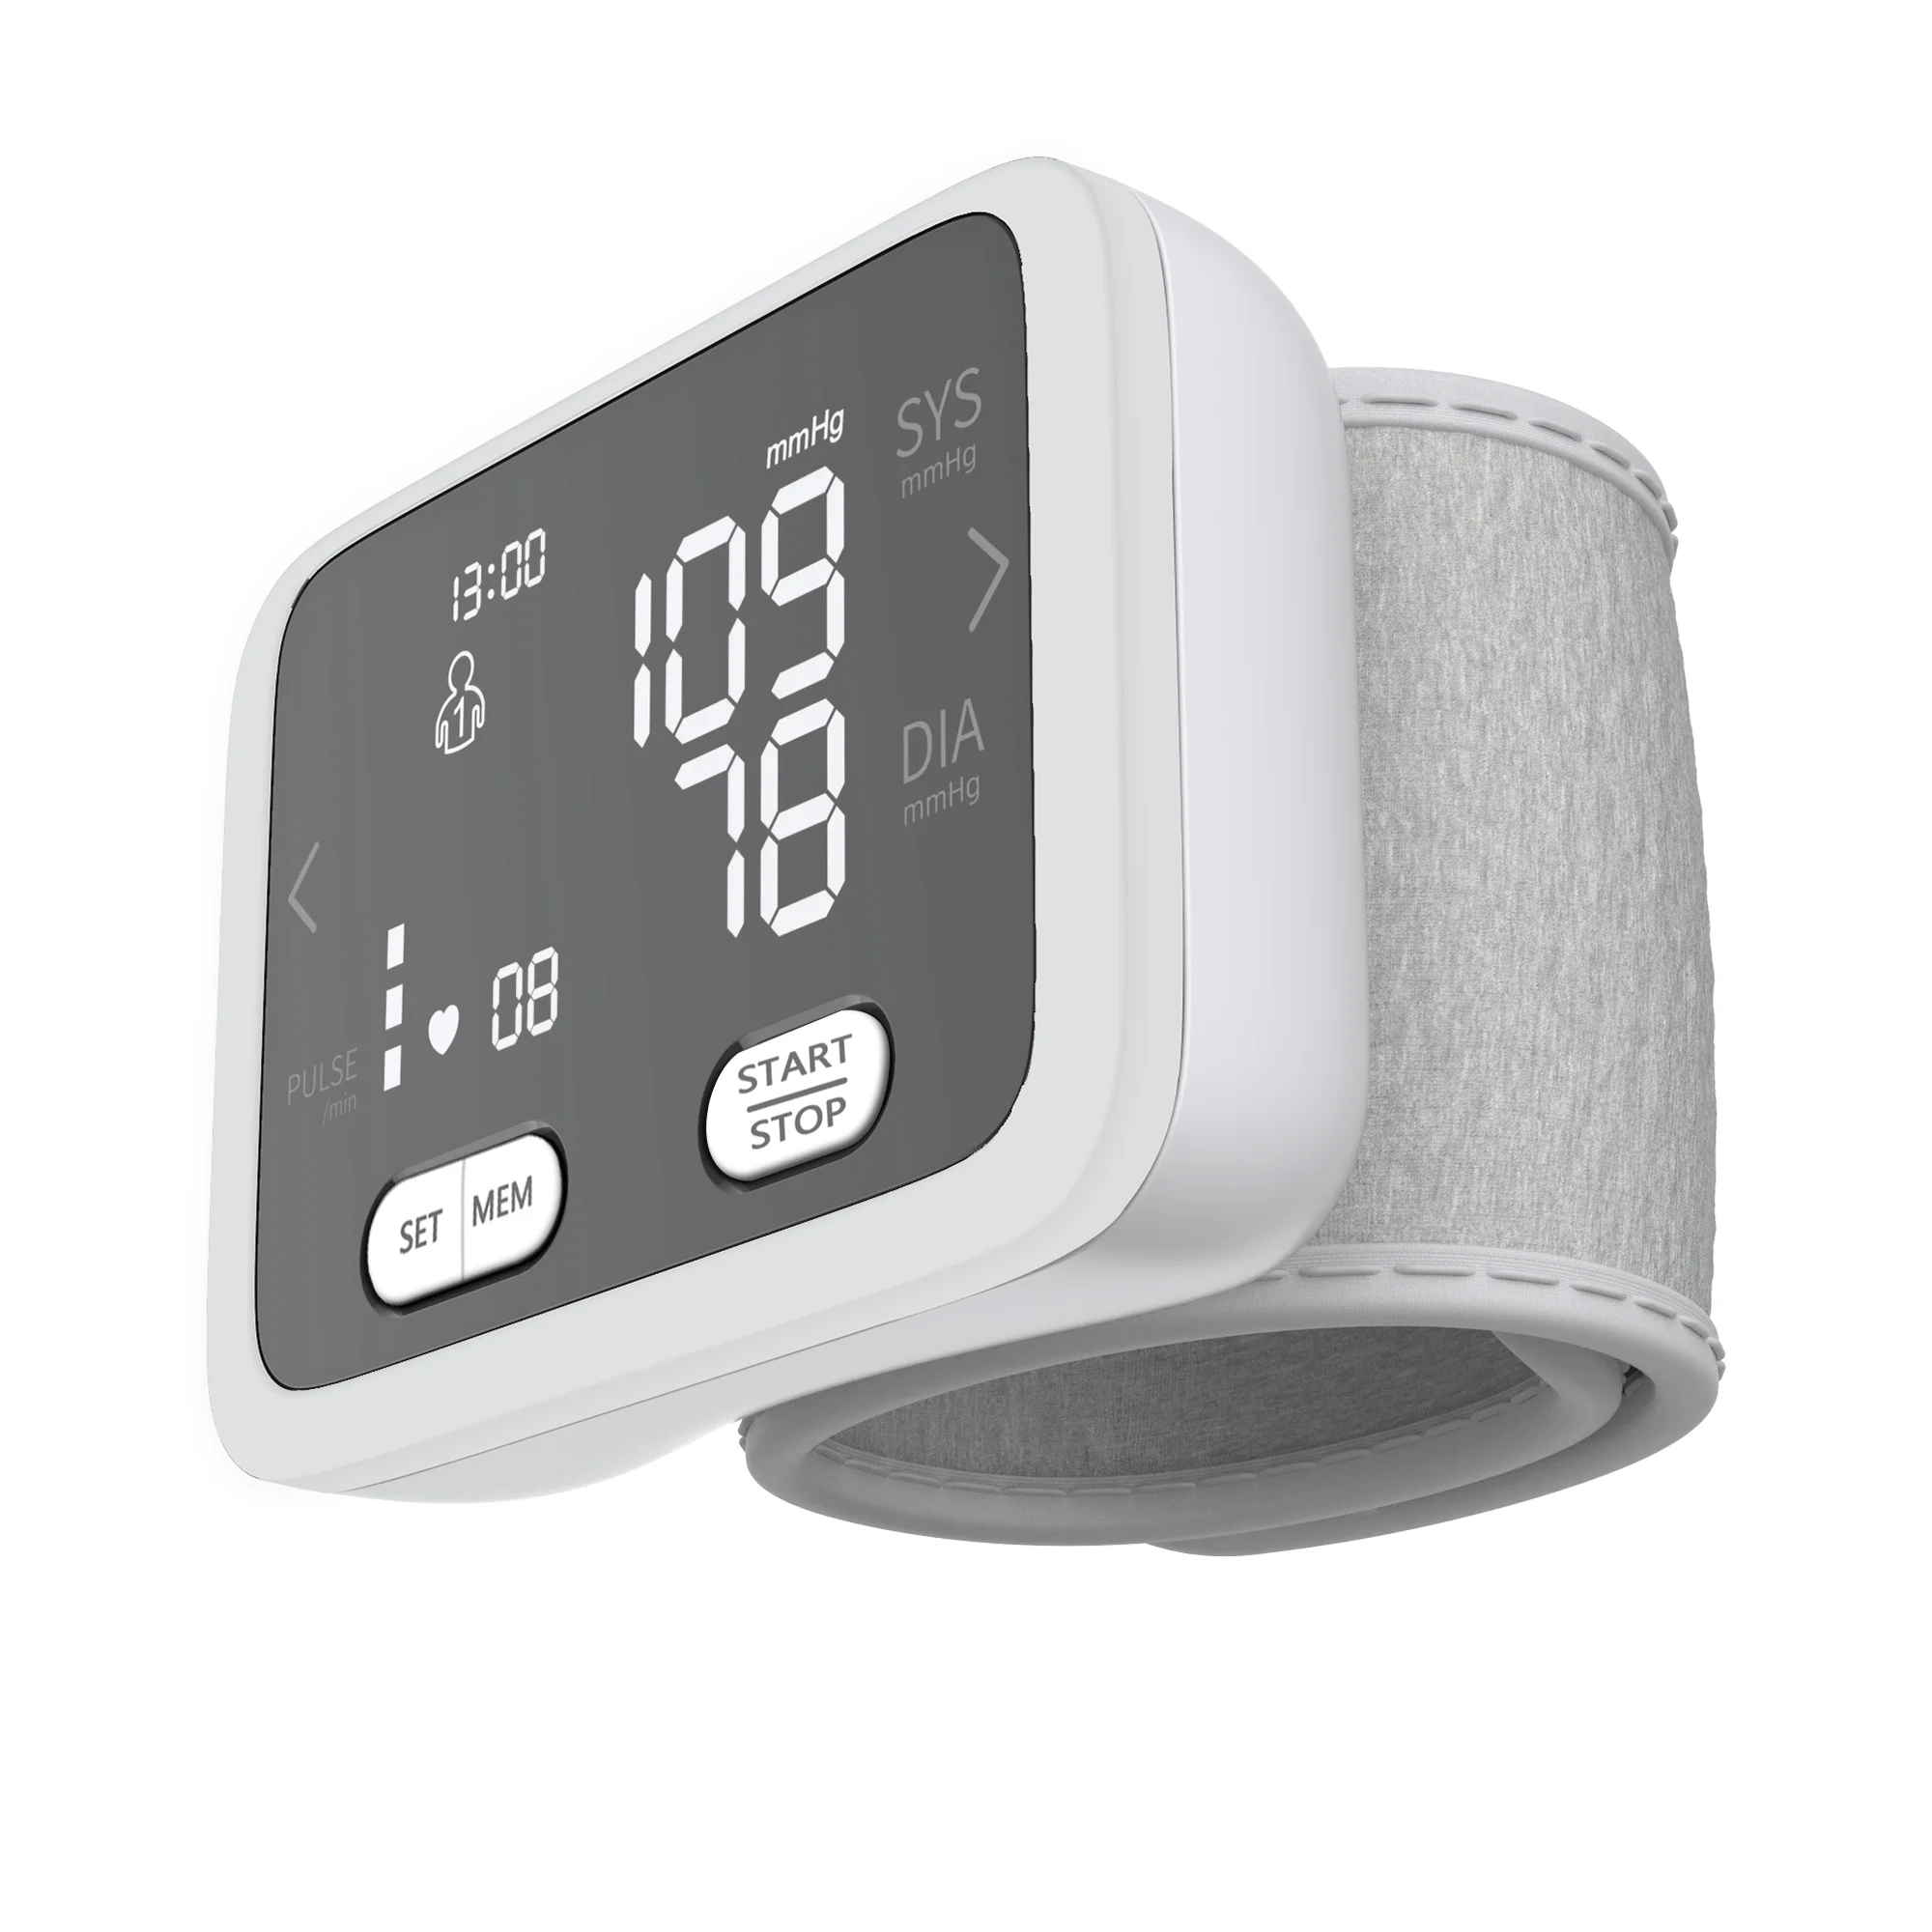 
digital automatic wrist health care blood pressure bp monitor 